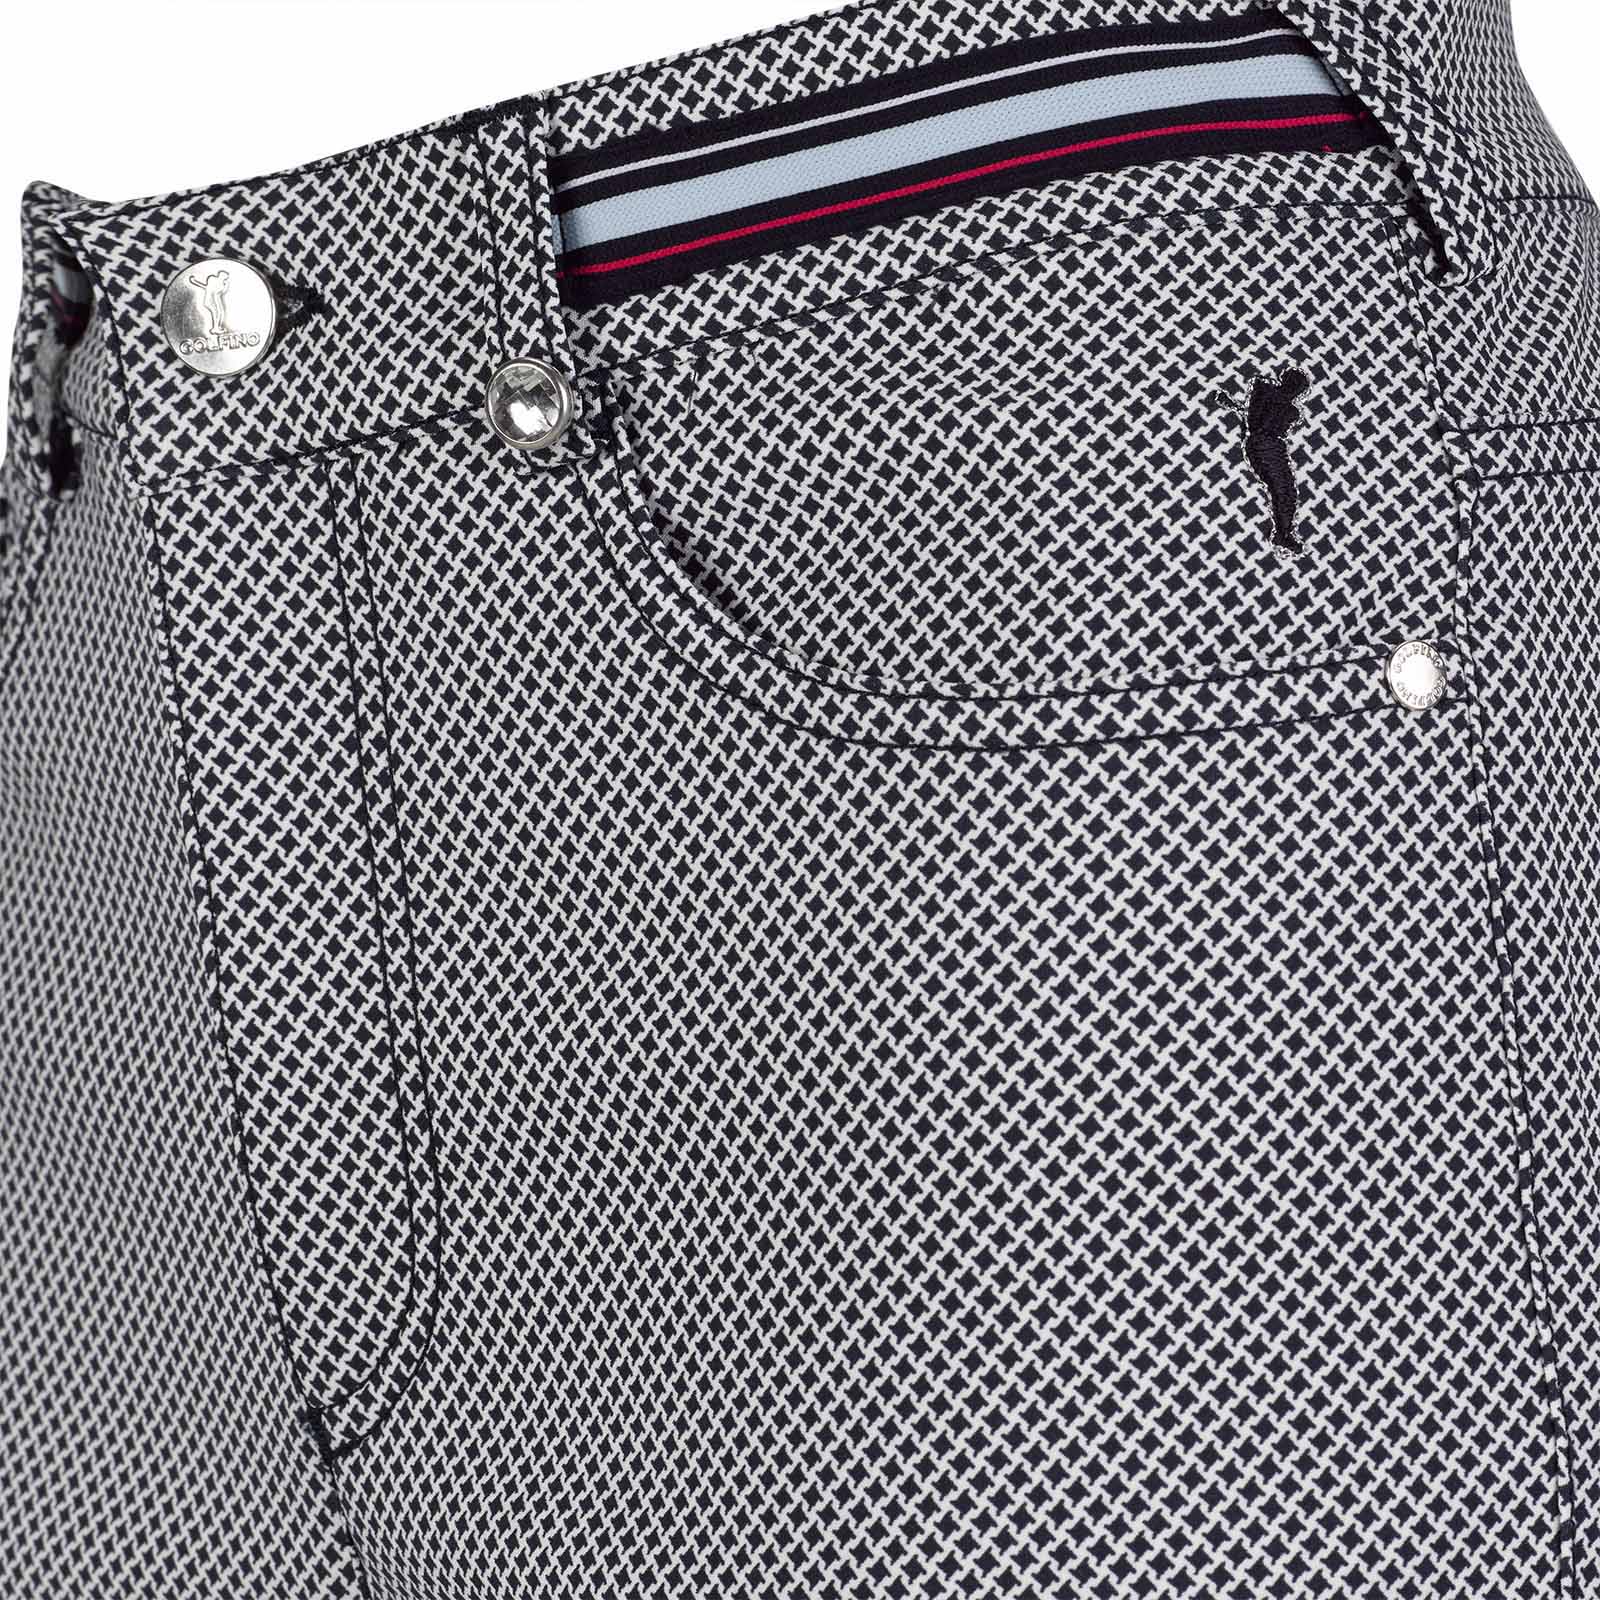 Gemusterte 7/8 Damen Golfhose mit Stretchfunktion im 5-Pocket-Stil